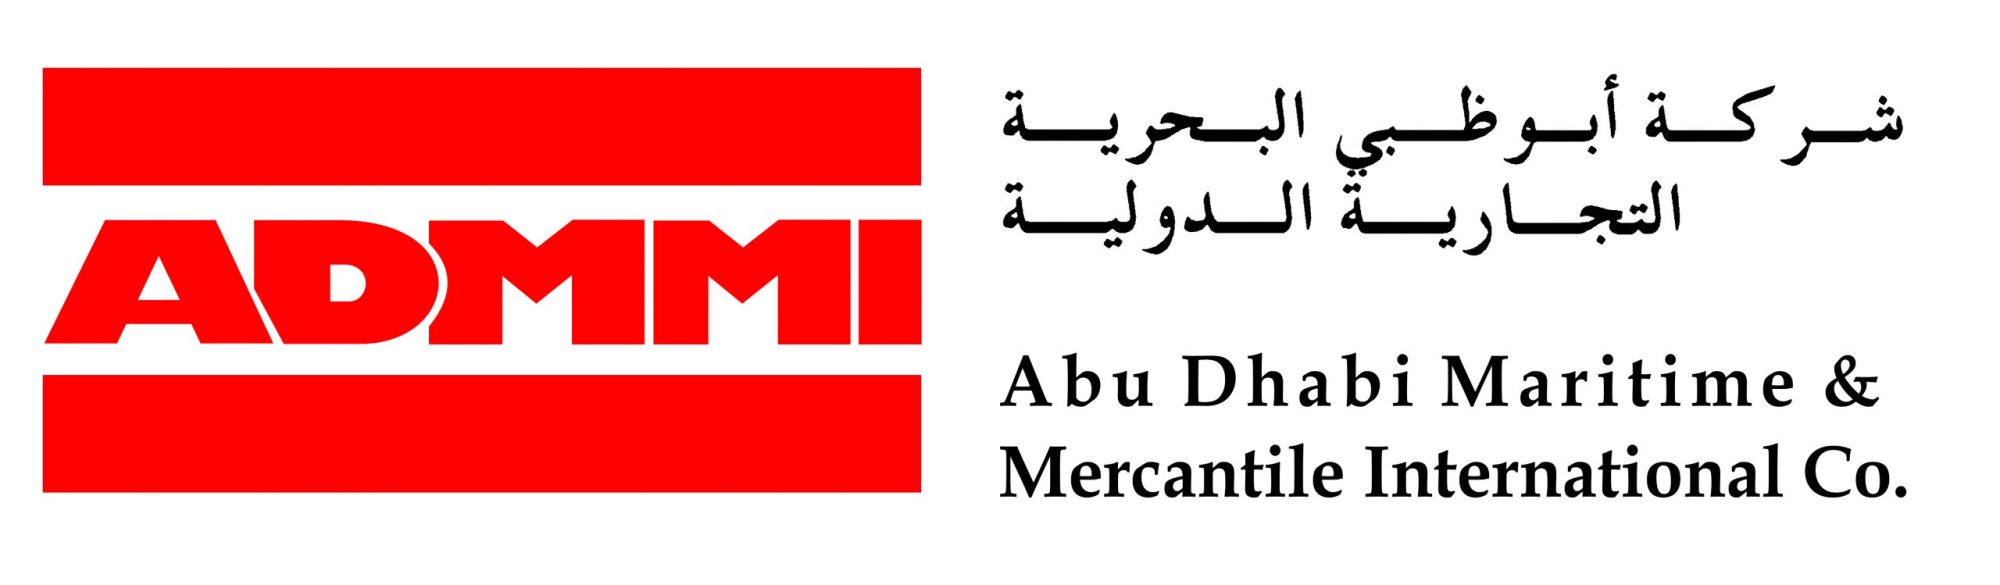 Abu Dhabi Maritime and Mercantile International Co